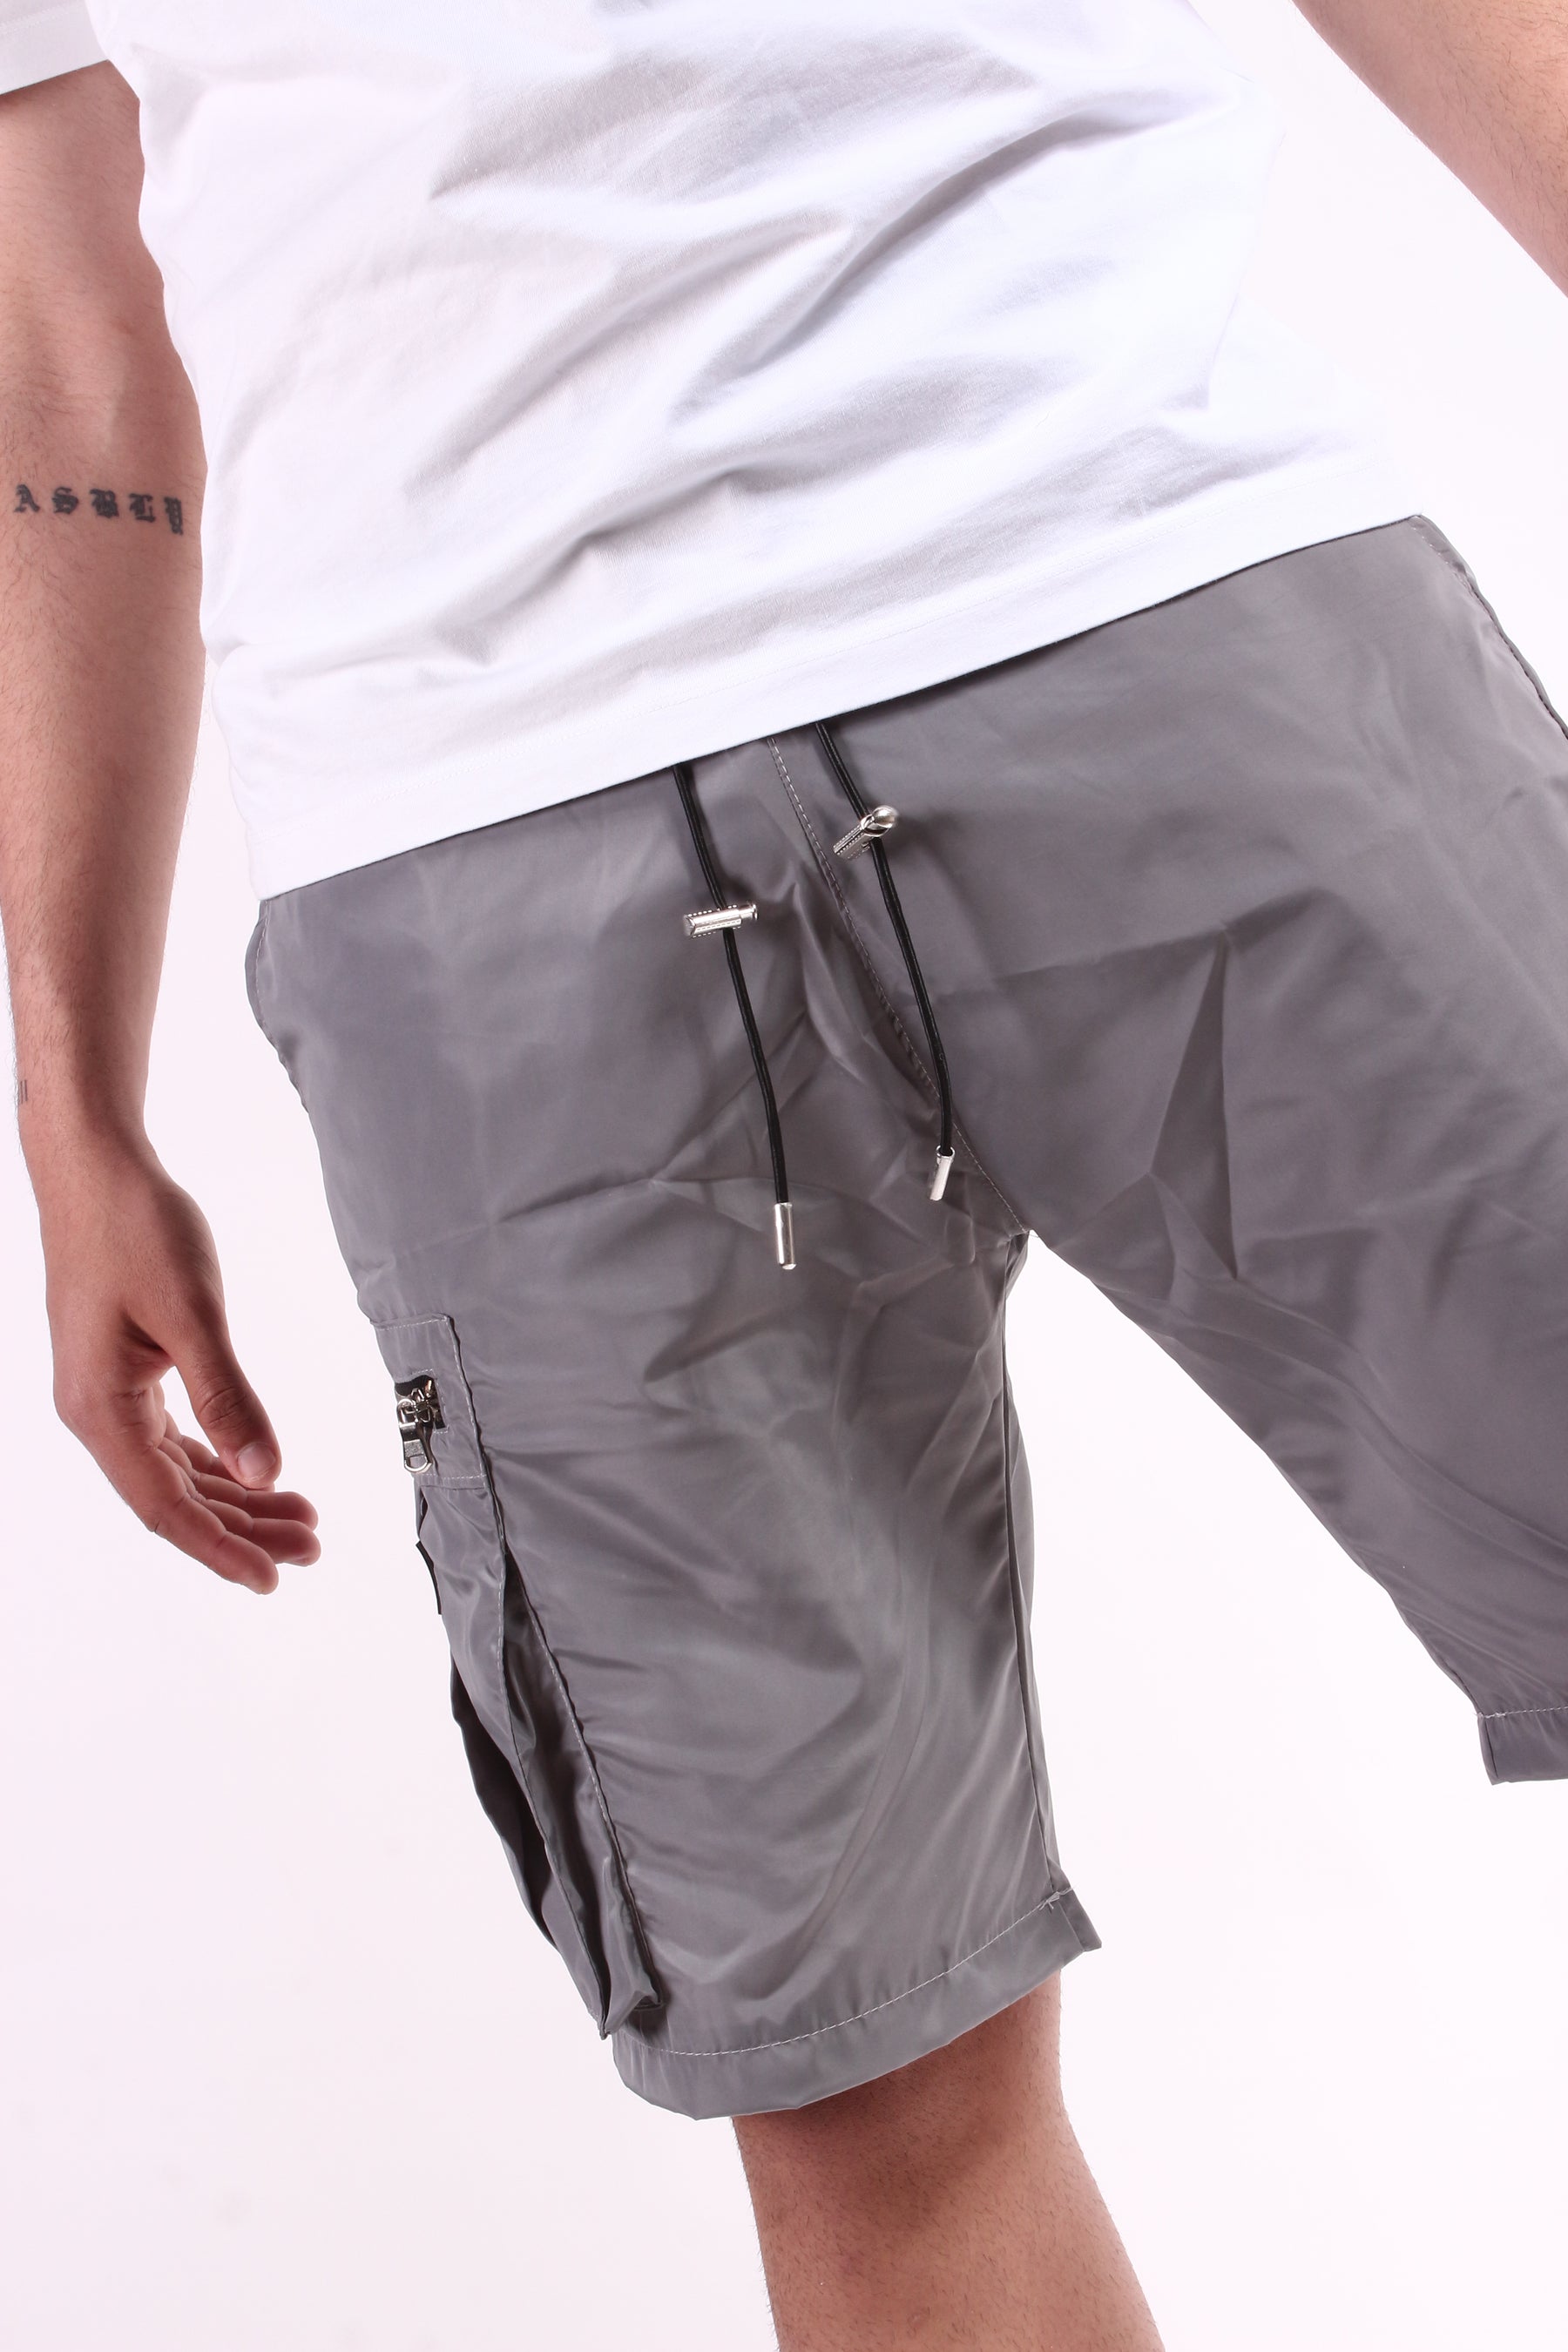 CREW Short Premium Cargo Pants Grey